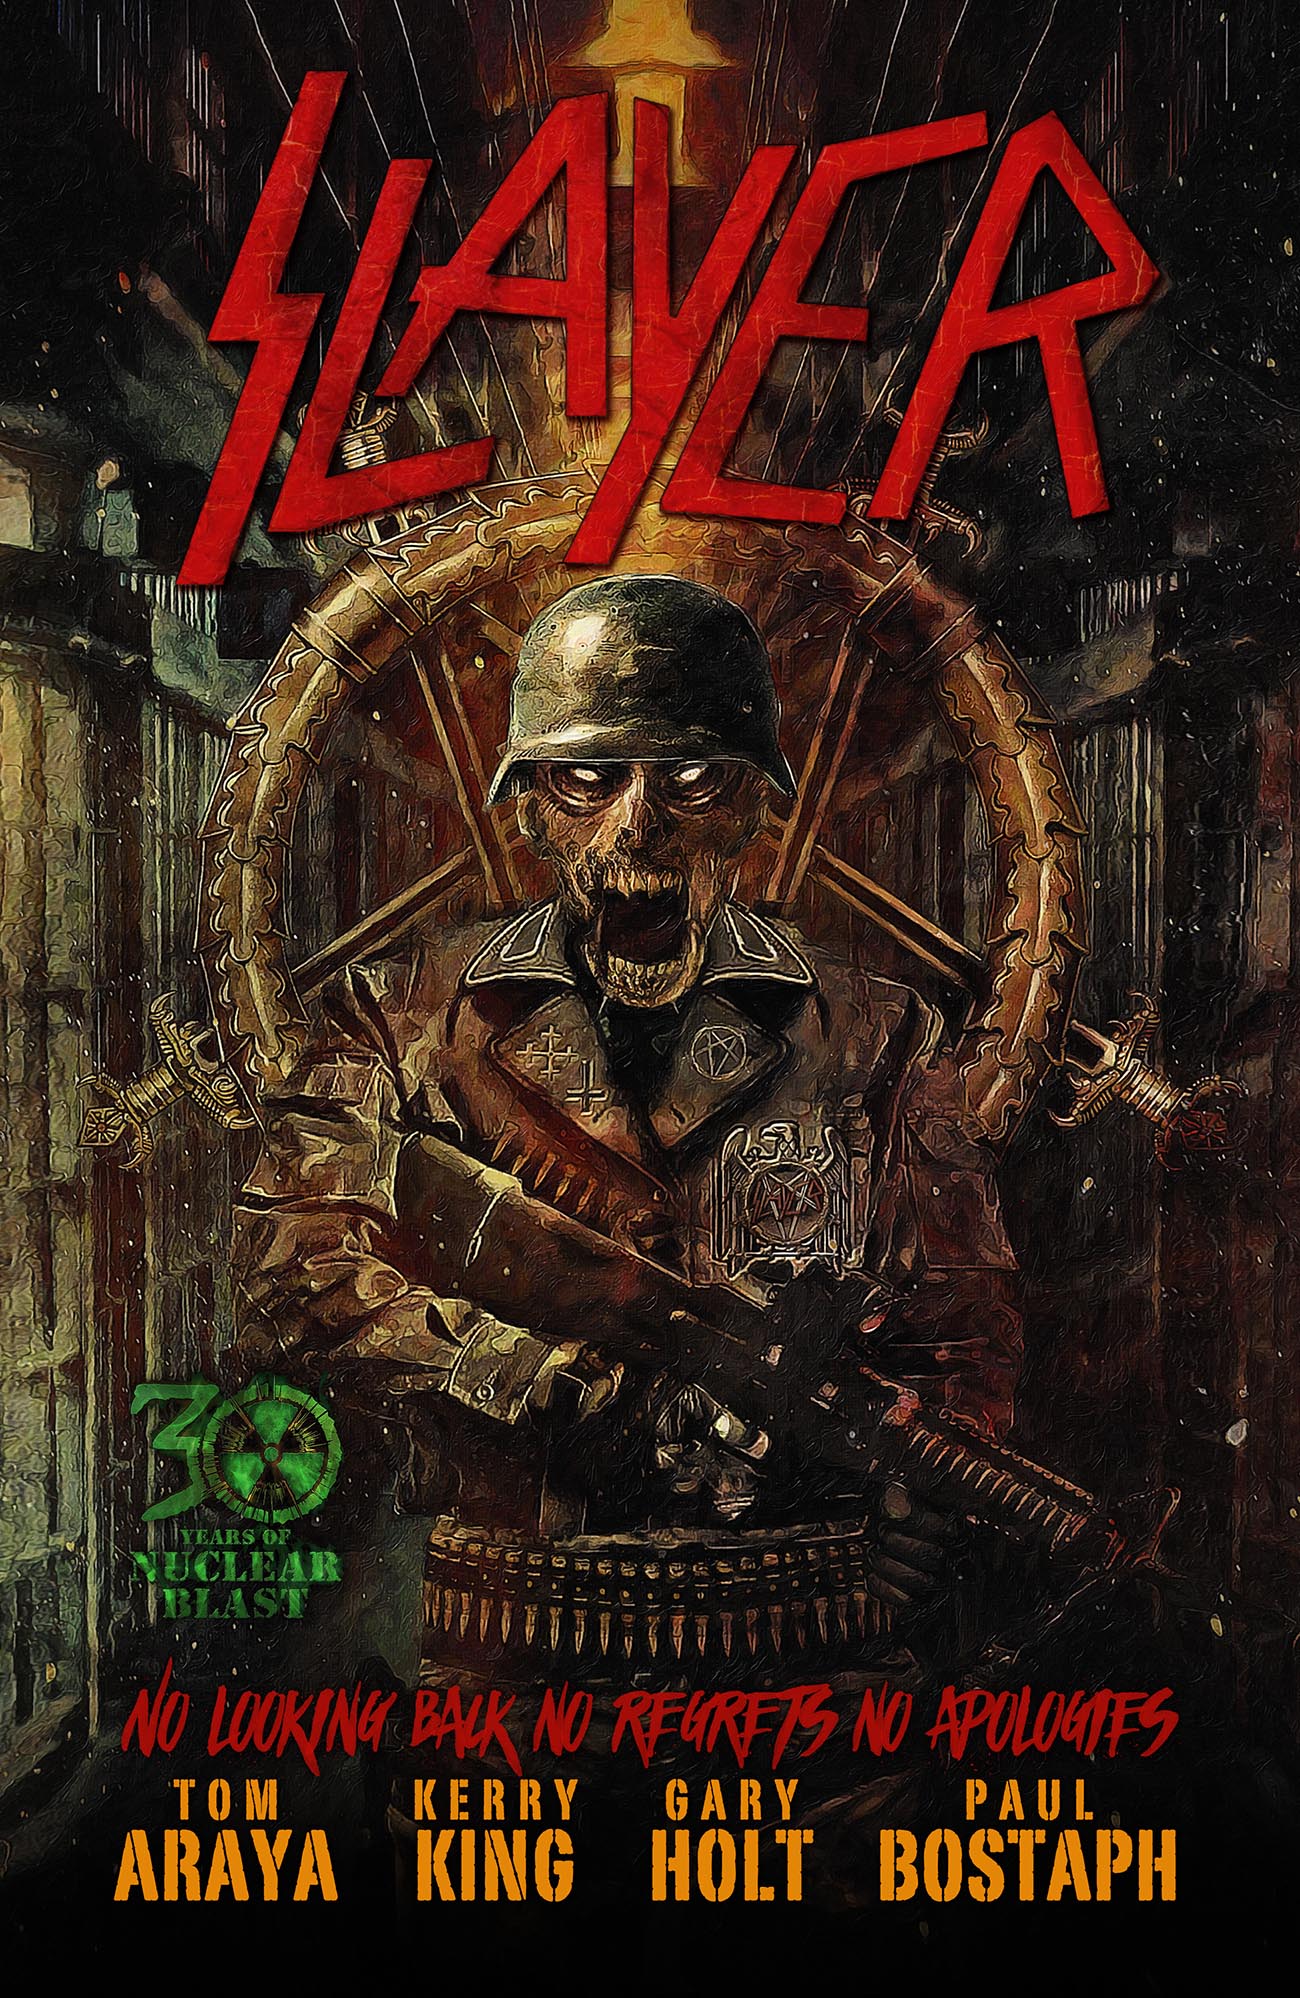 Marcelo Vasco: El artista brasilero que ilustra las portadas de Slayer,  Obituary y Kreator | Cartel Urbano